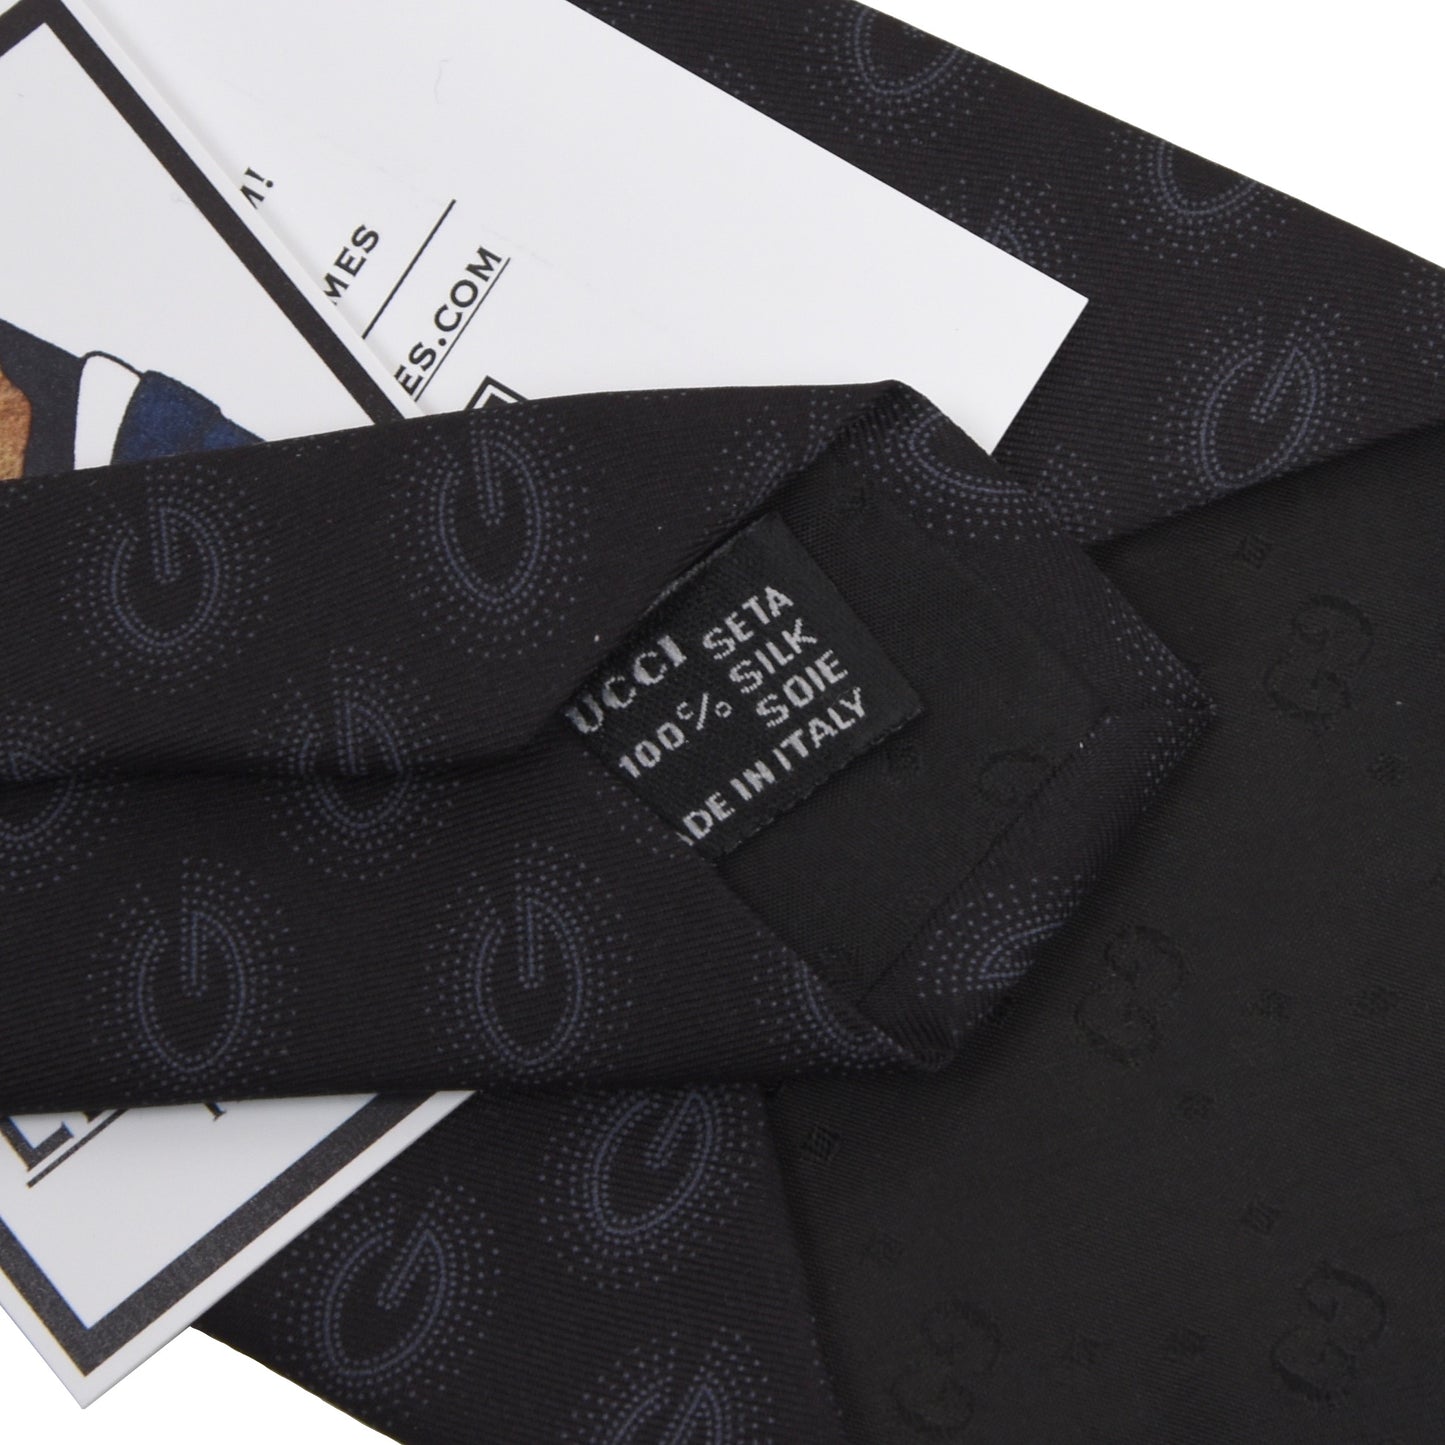 Gucci Monogram Tie - Black/Charcoal